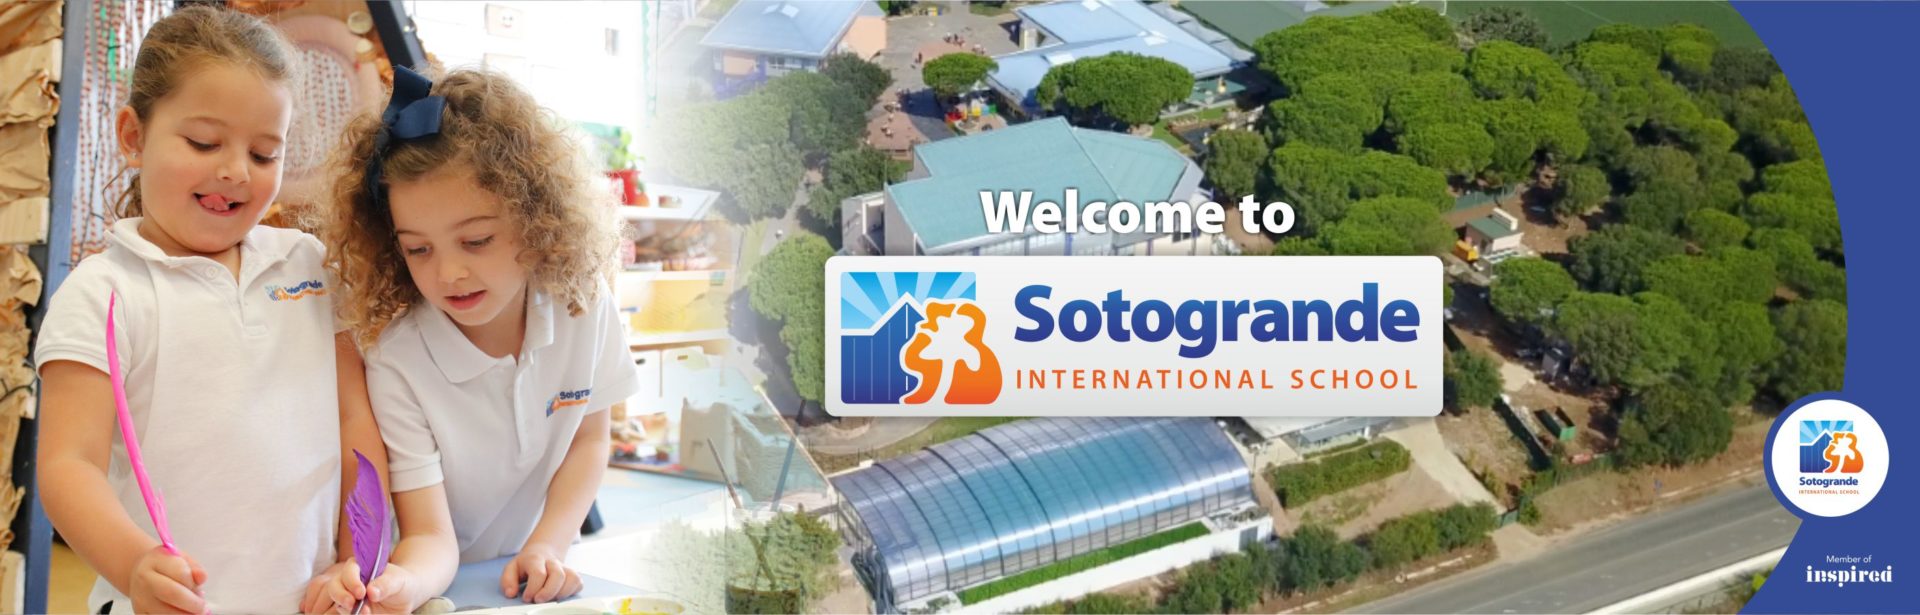 Sotogrande International